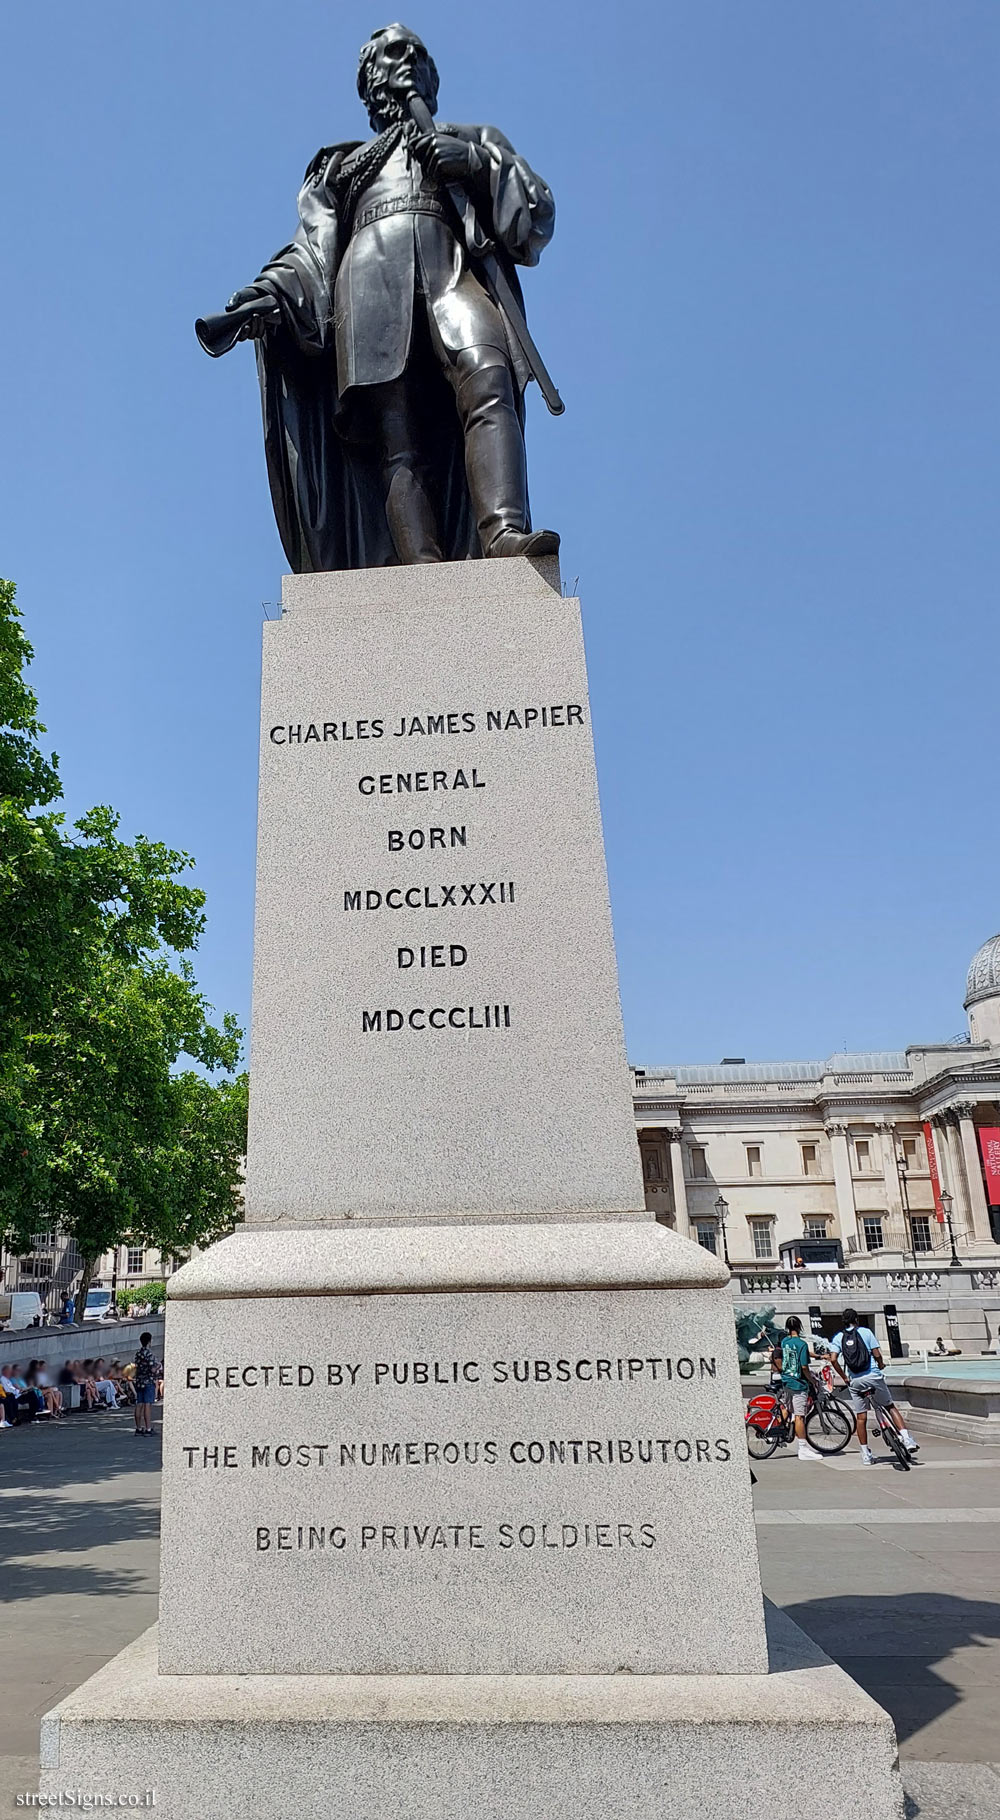 London - Trafalgar Square - Statue commemorating Charles James Napier - Trafalgar Square, London WC2N 5DU, UK